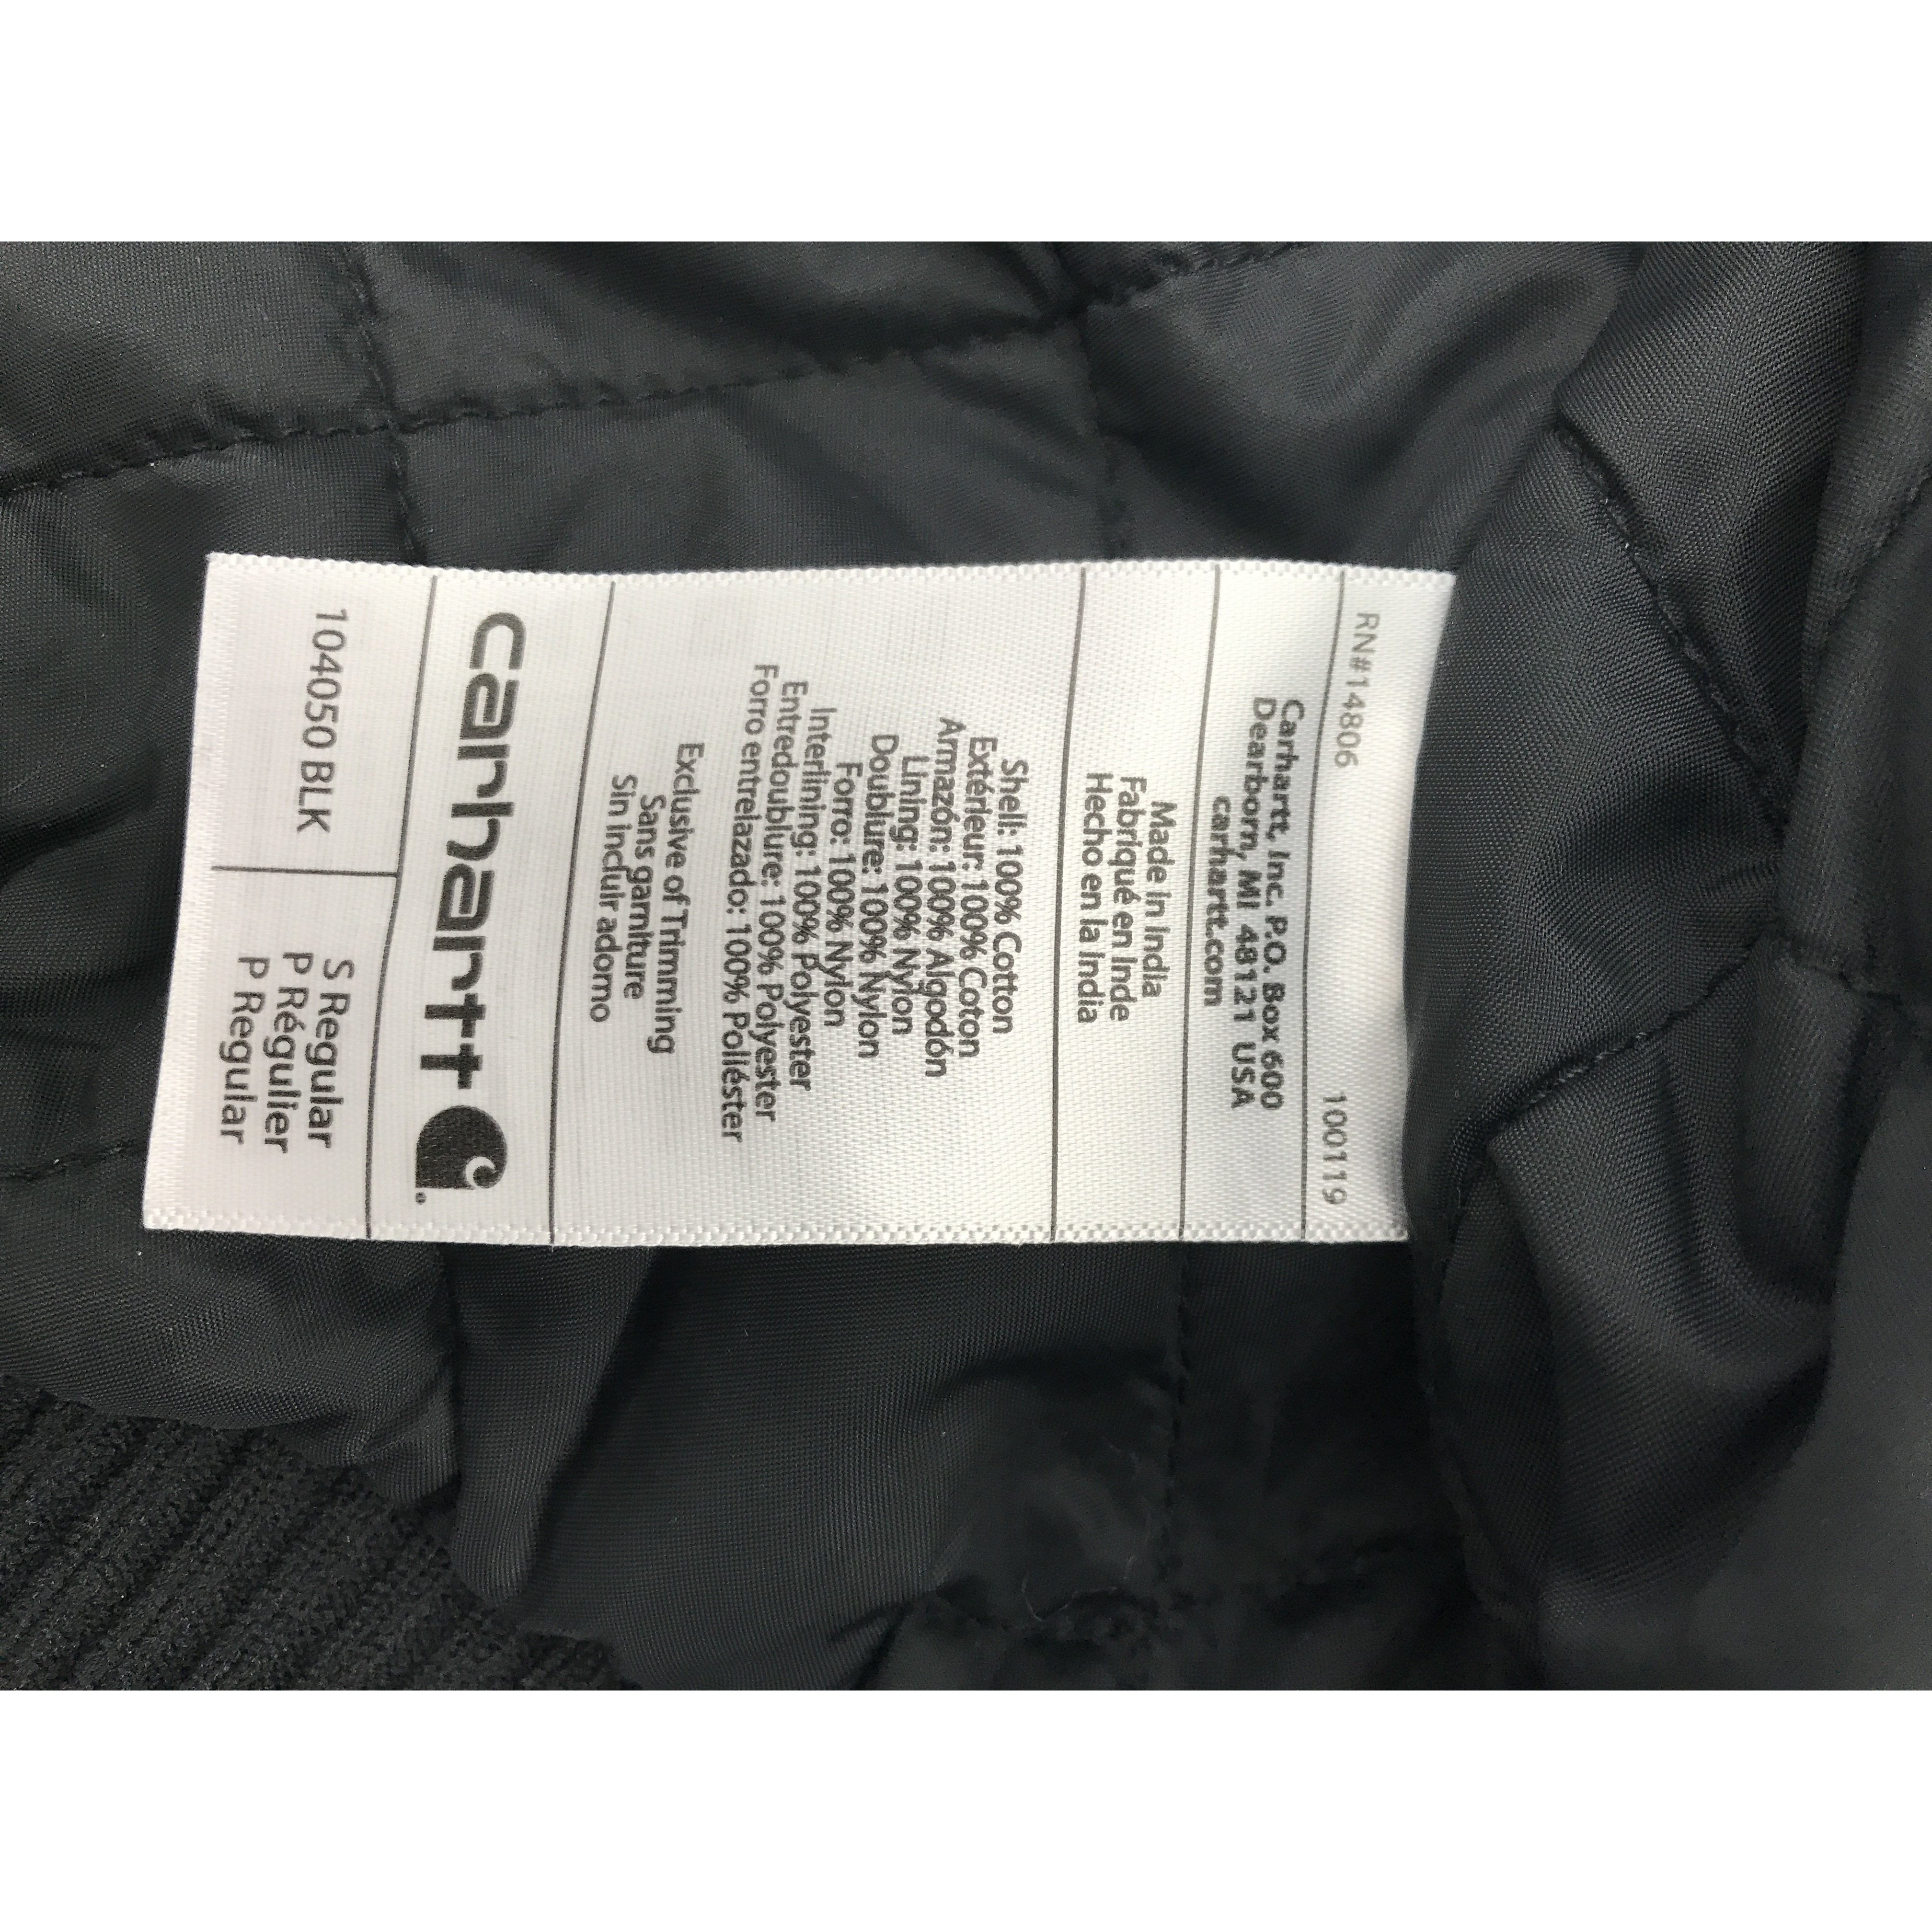 Carhartt Work Jacket: Black / Small